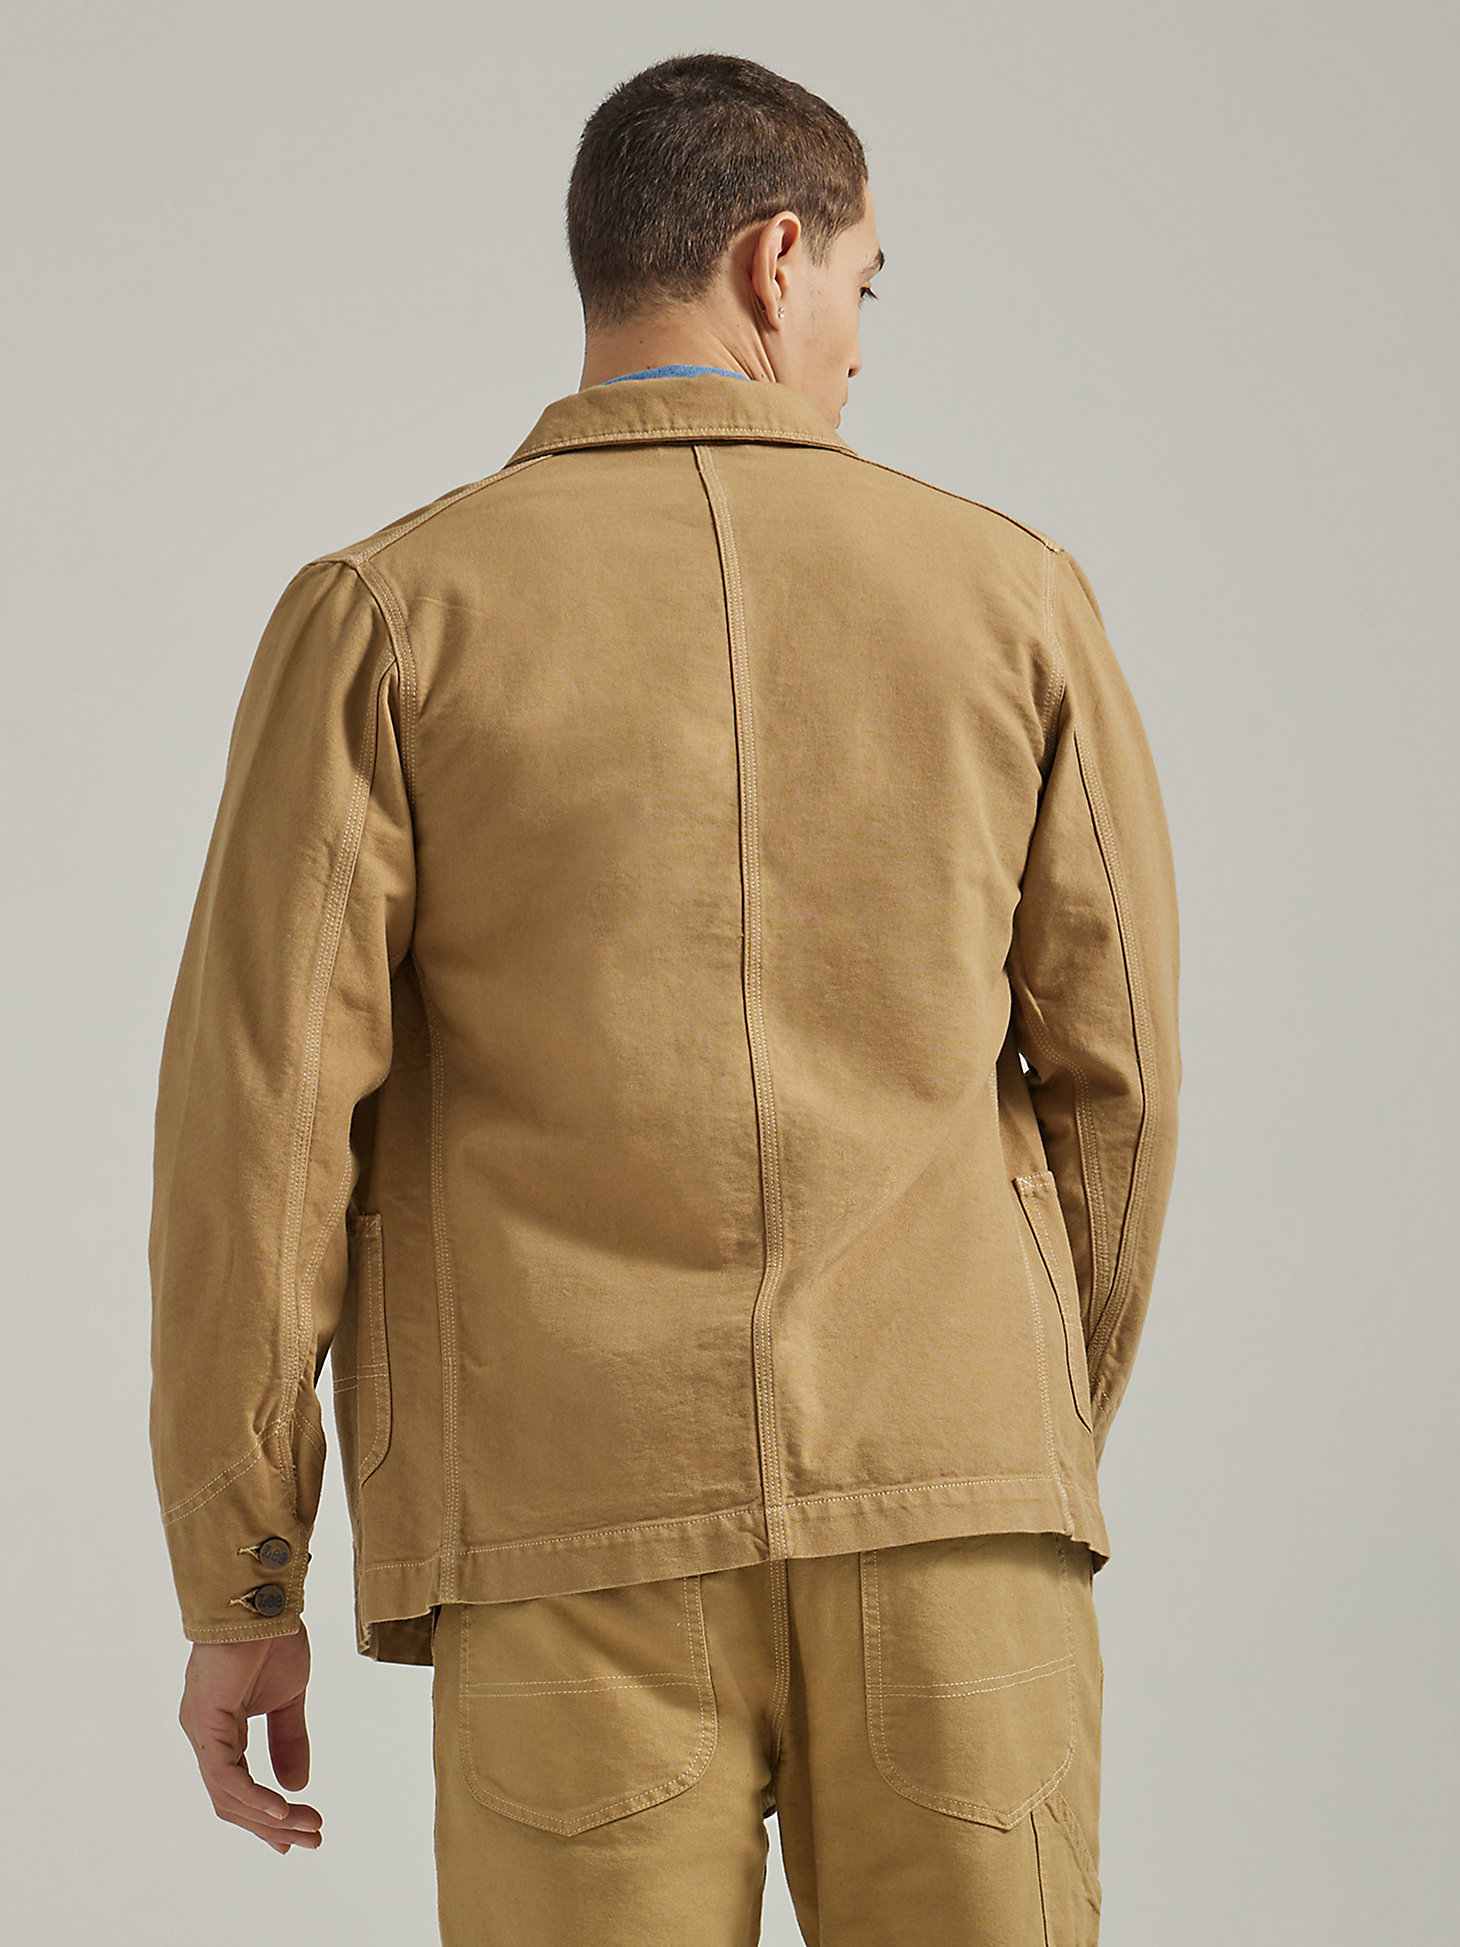 Men's Canvas Workwear Loco Jacket in Clay alternative view 1